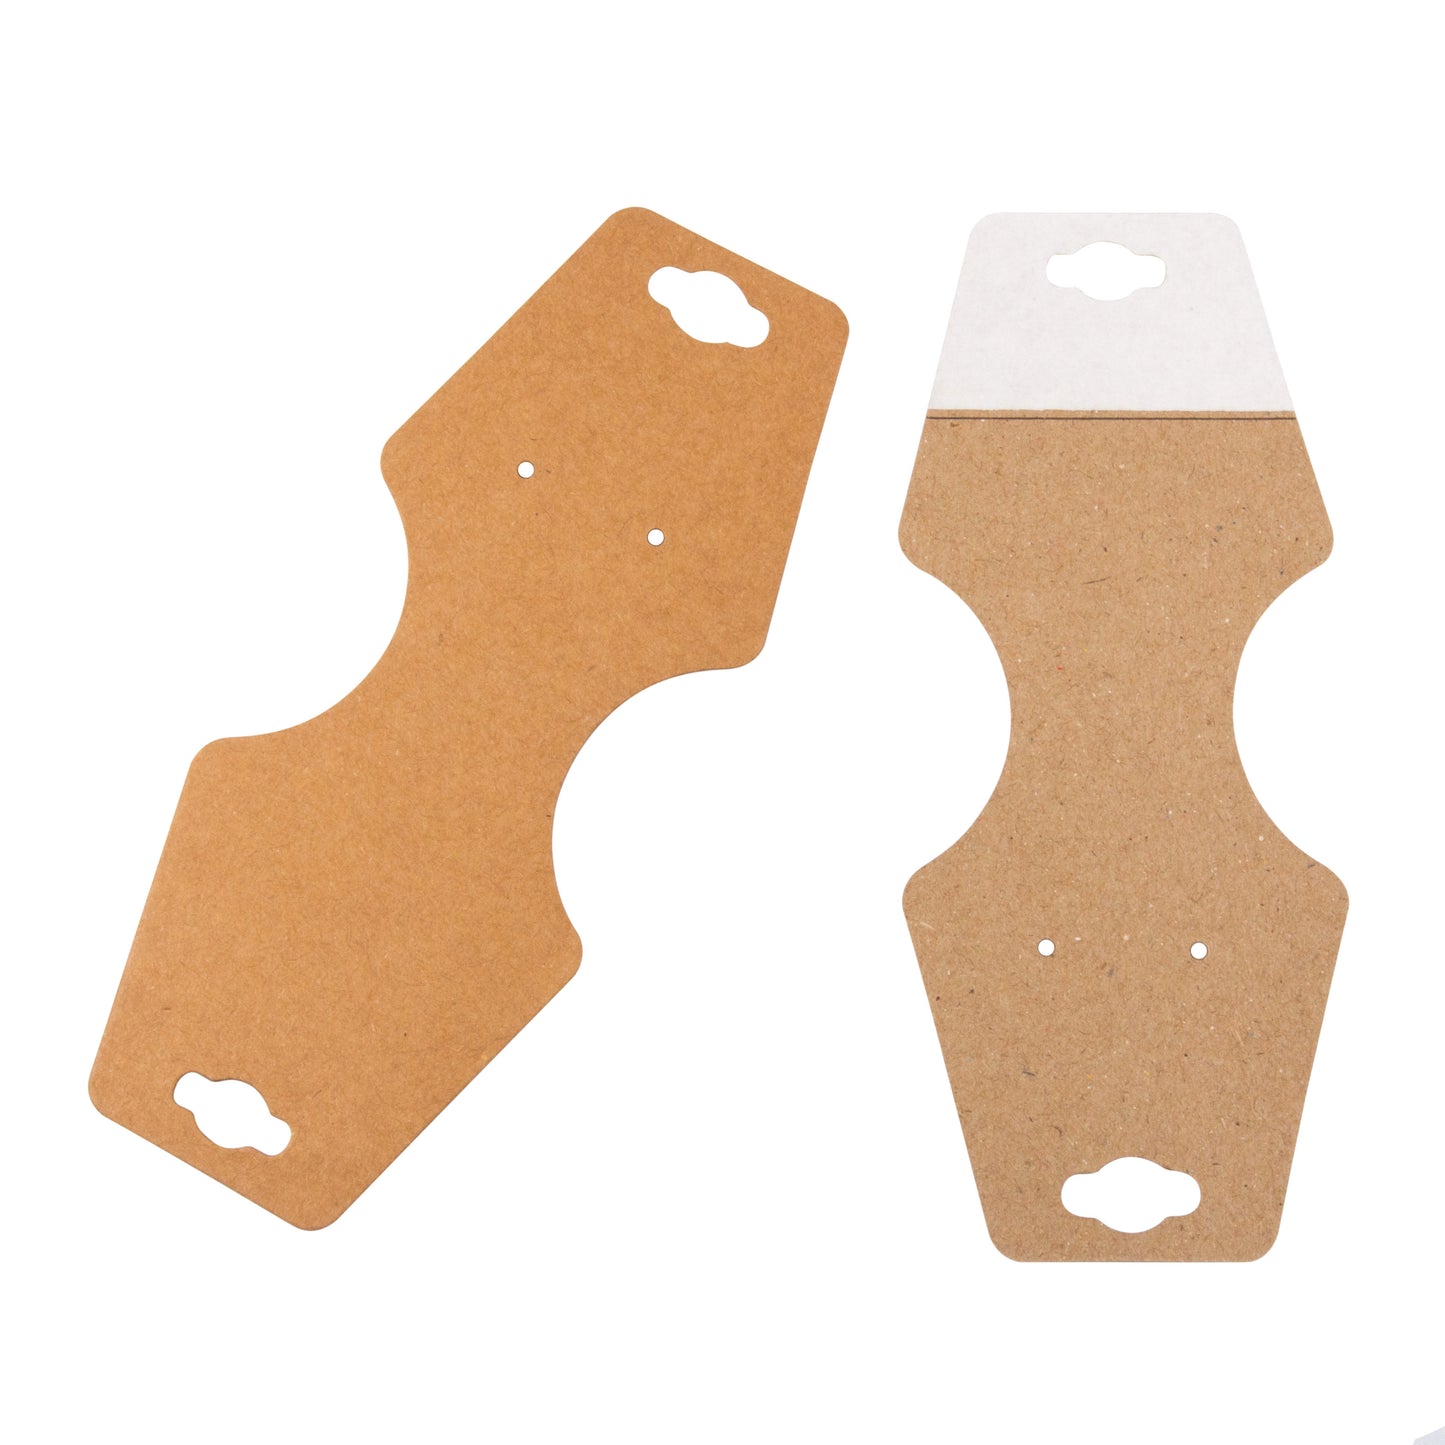 Large Necklace/Bracelet Foldover Cards - 100pcs/pack - (3 color options)